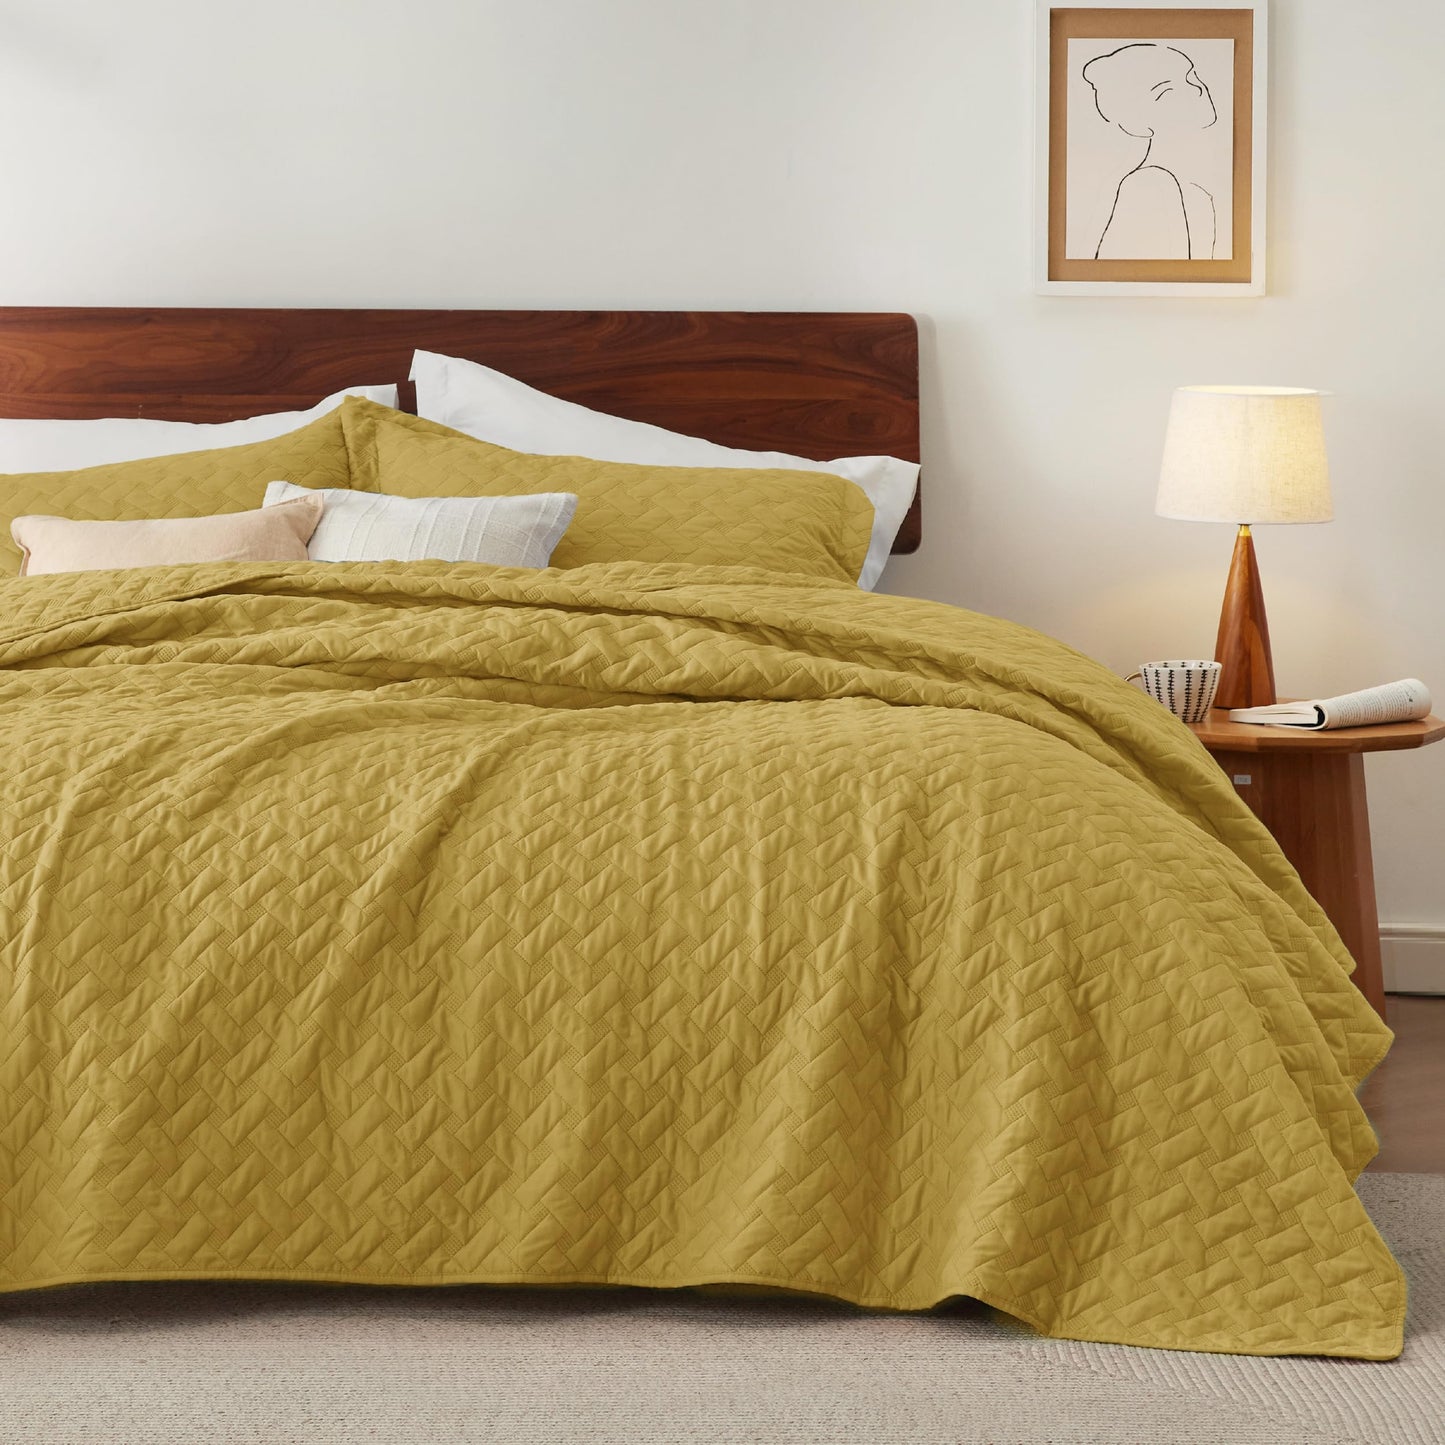 Bedsure Queen Quilt Bedding Set - Lightweight Spring Quilt Full/Queen - Mustard Yellow Bedspread Queen Size - Bedding Coverlet for All Seasons (Includes 1 Quilt, 2 Pillow Shams)